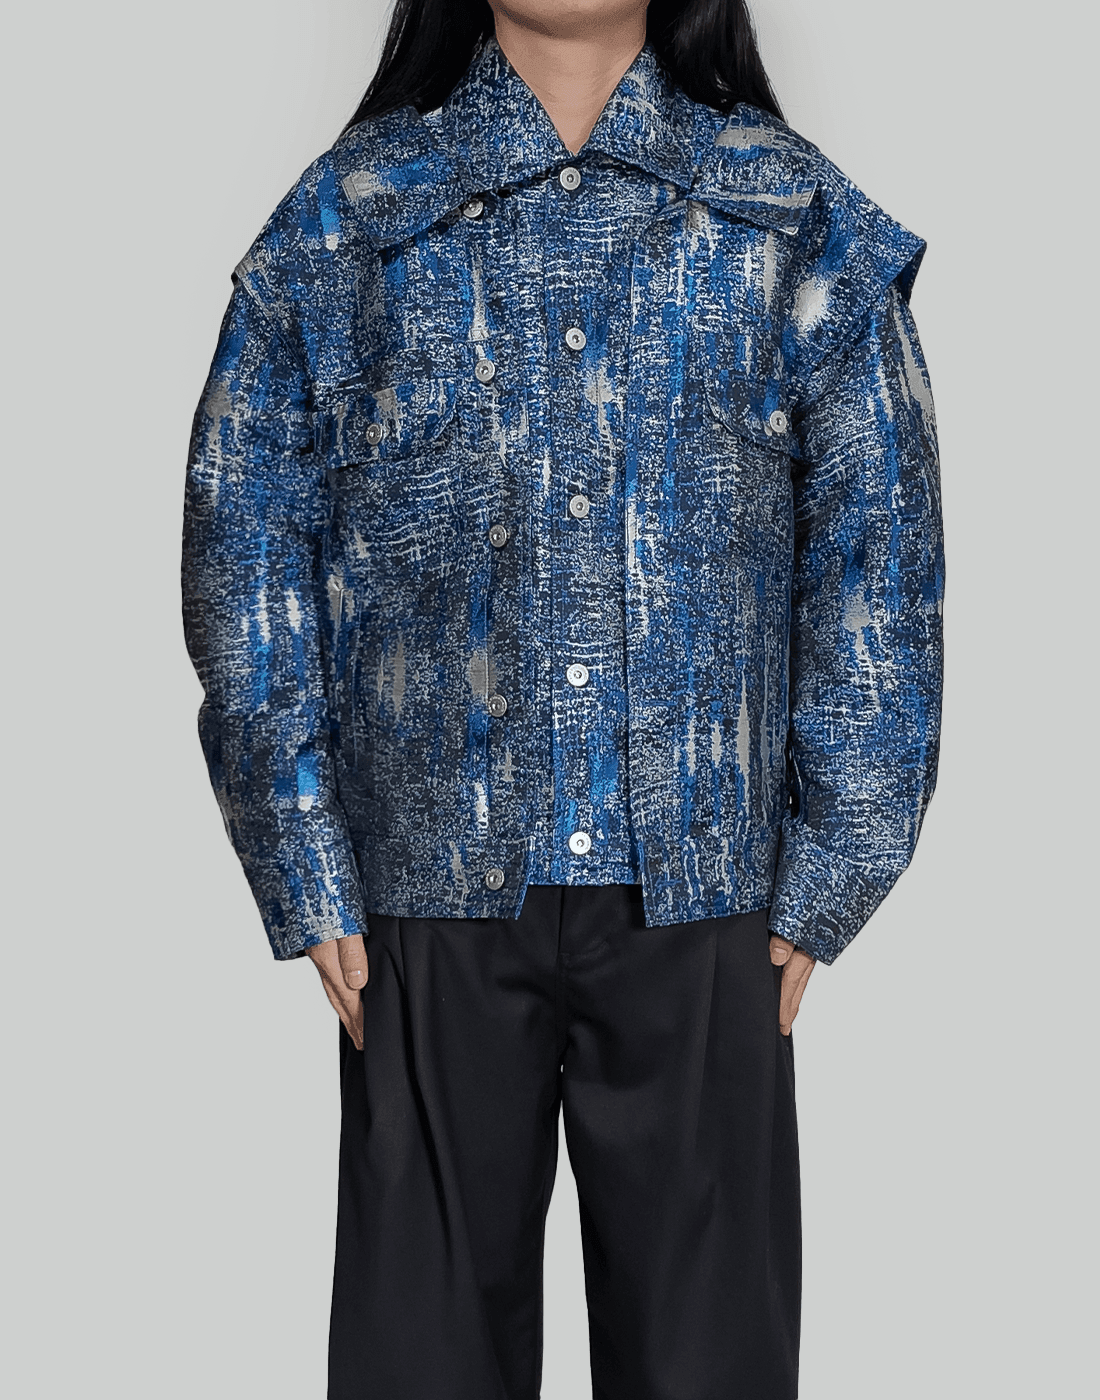 Feng Chen Wang Black Jacquard Denim Jacket